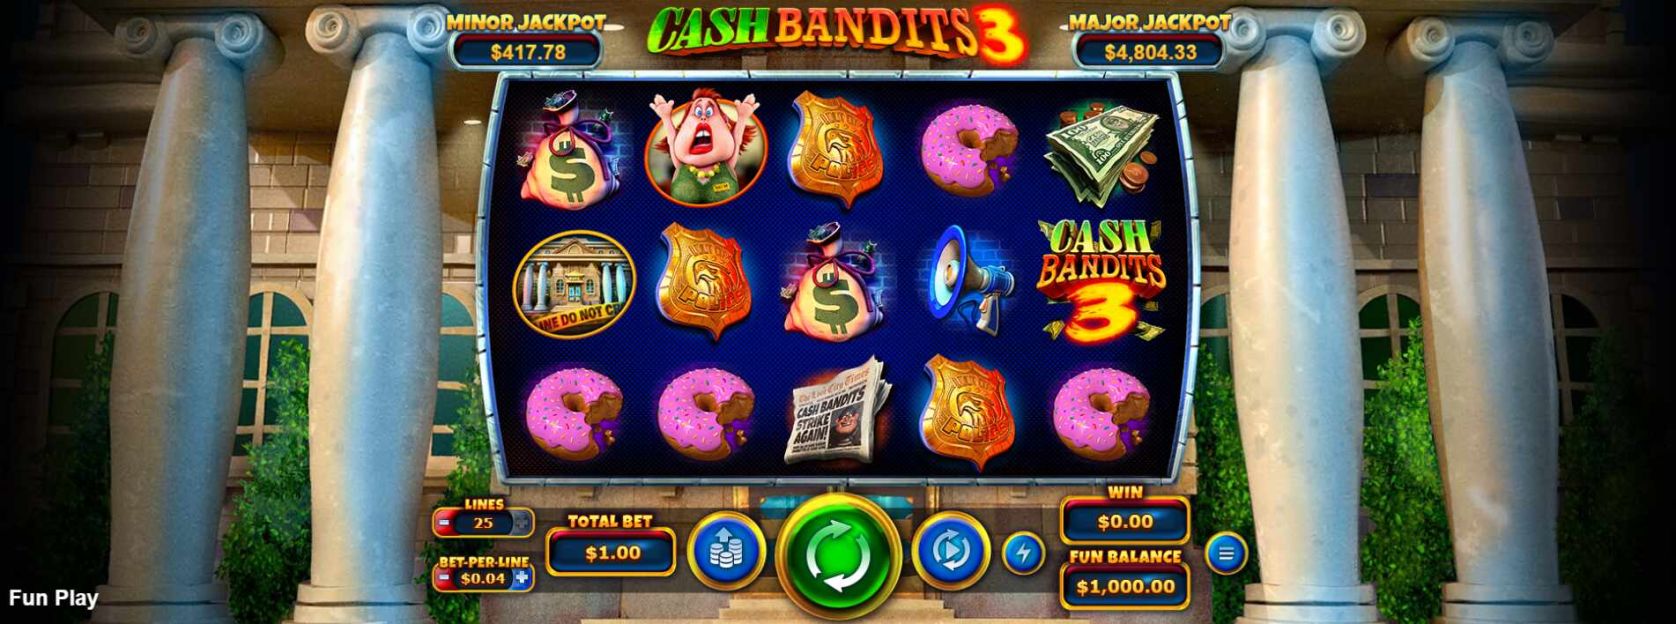 Cash Bandits 3 screenshot 1